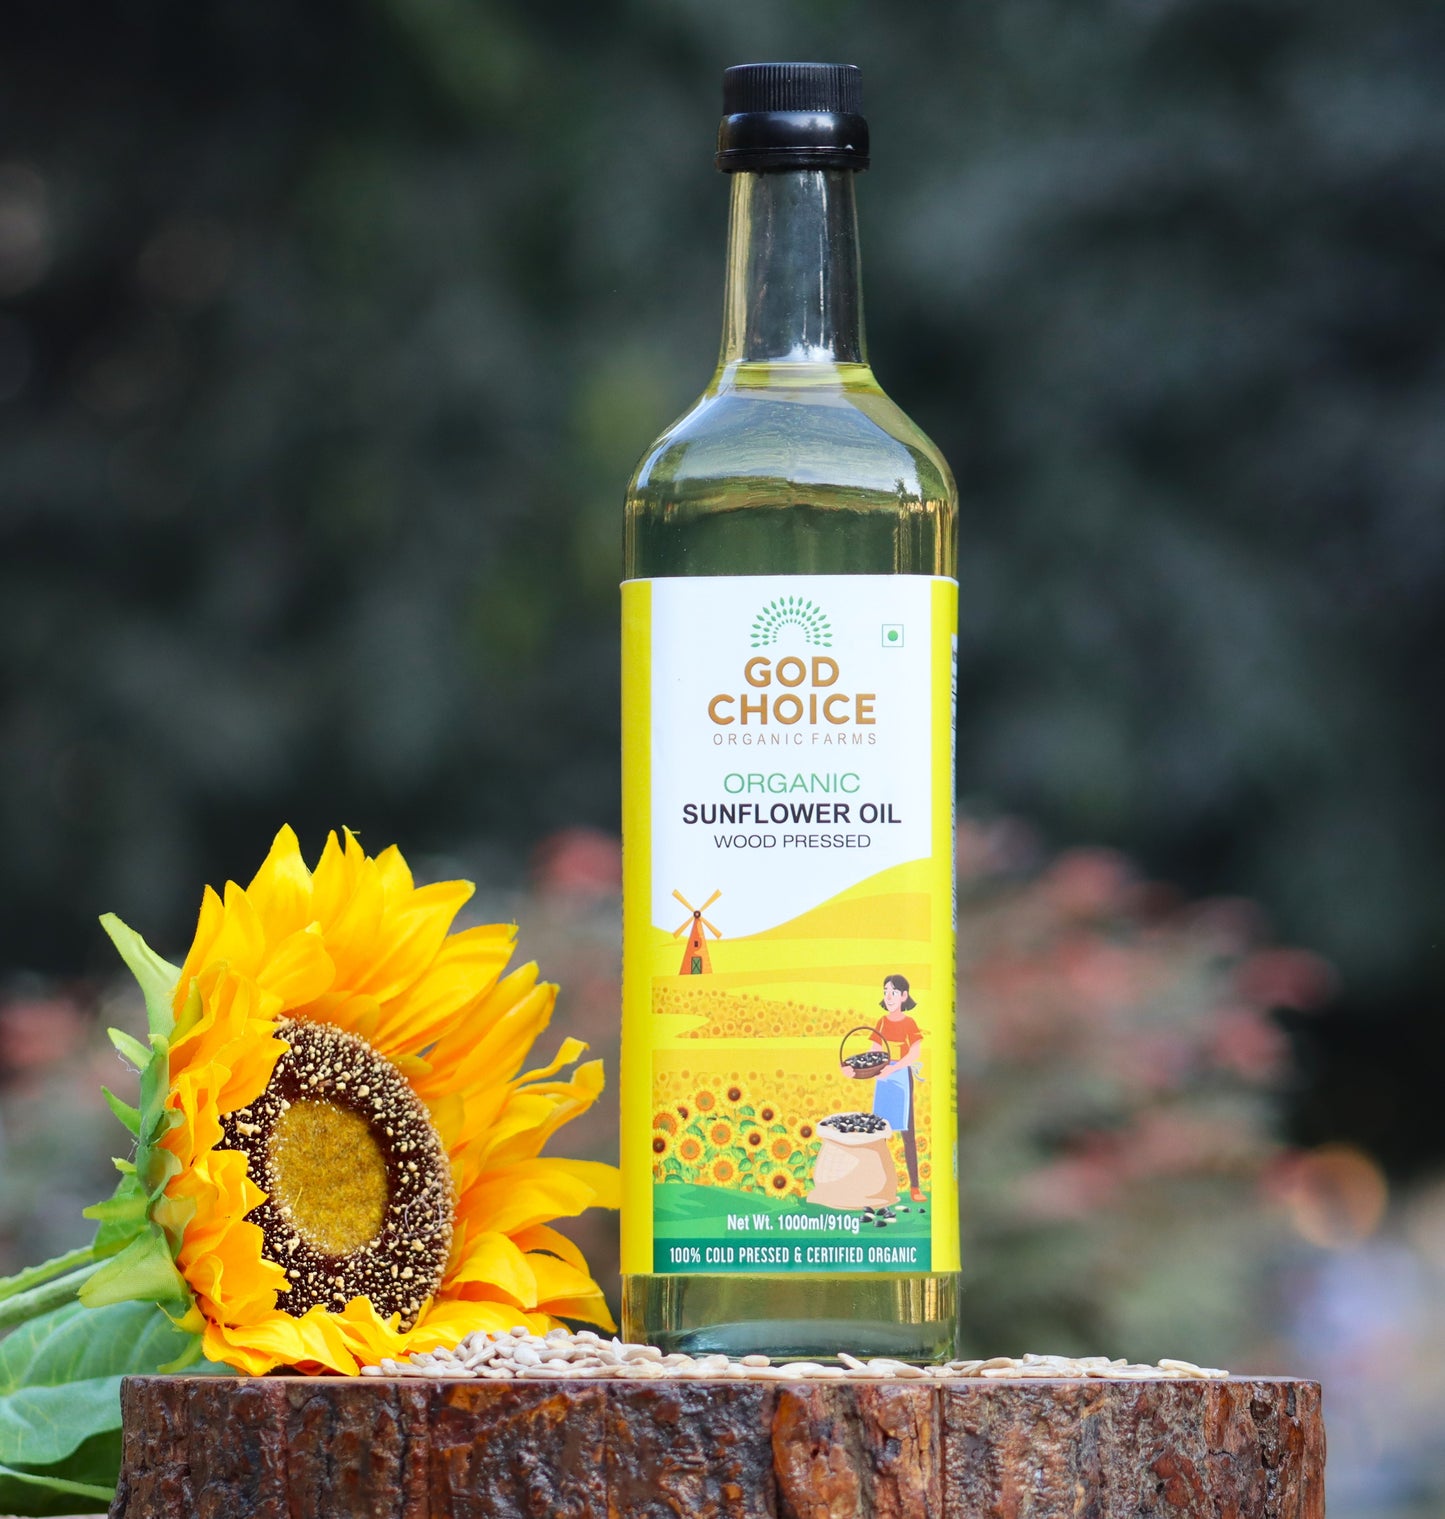 Organic Sunflower Oil | Wood Pressed | Single-Filtered